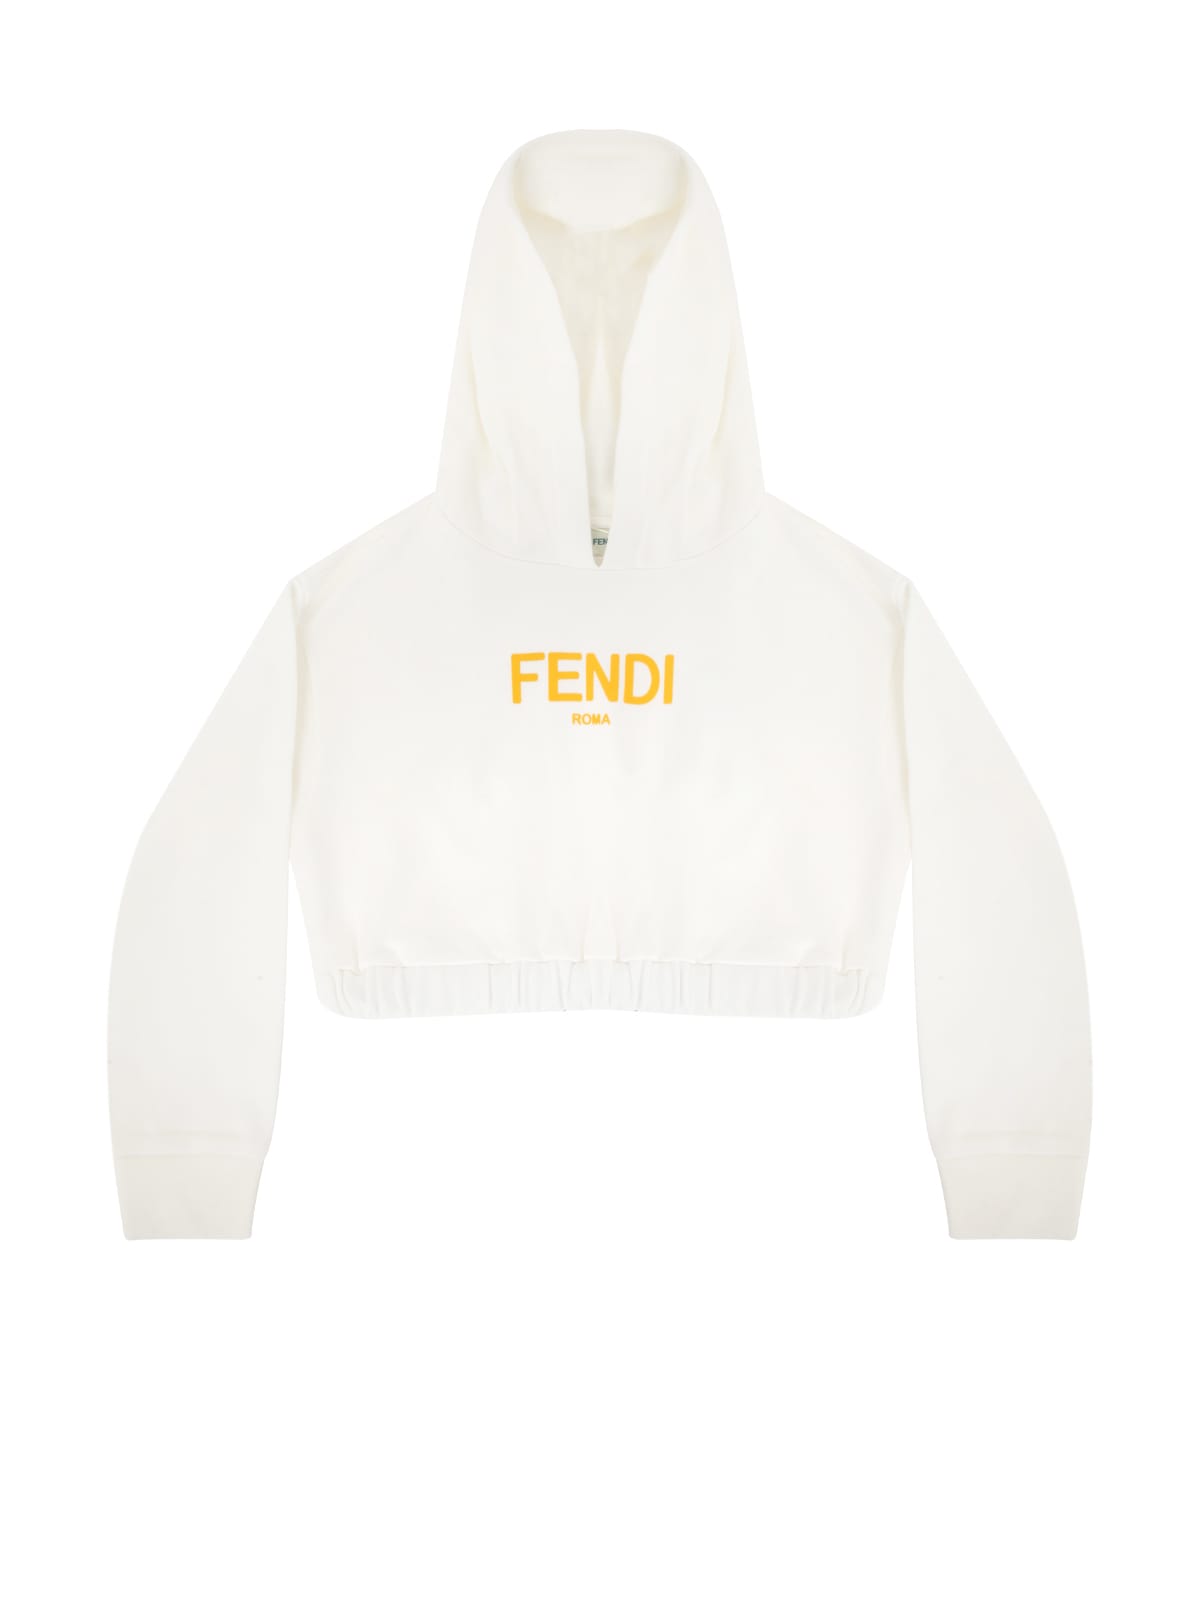 Fendi Crew Neck Sweatshirt